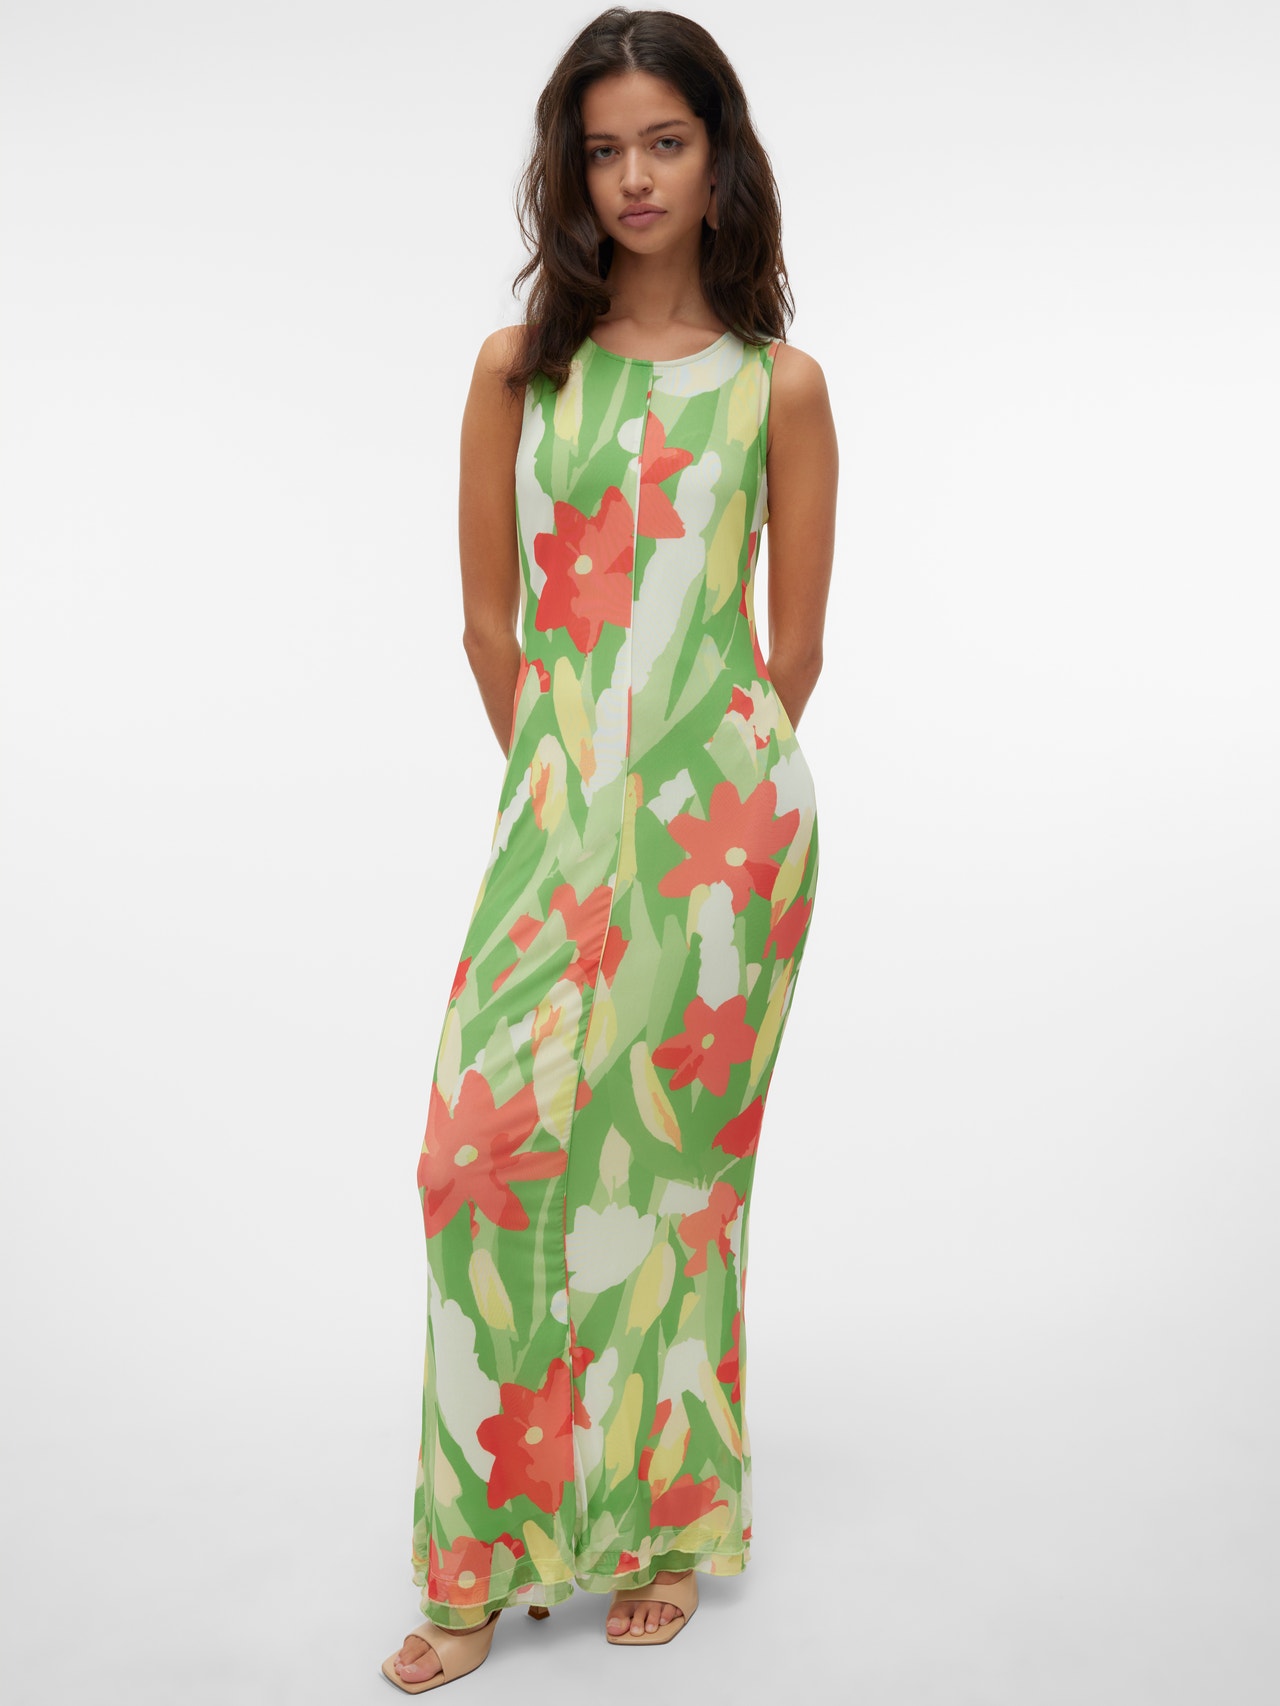 Vero Moda VMLAURA Long dress -Jade Lime - 10312957